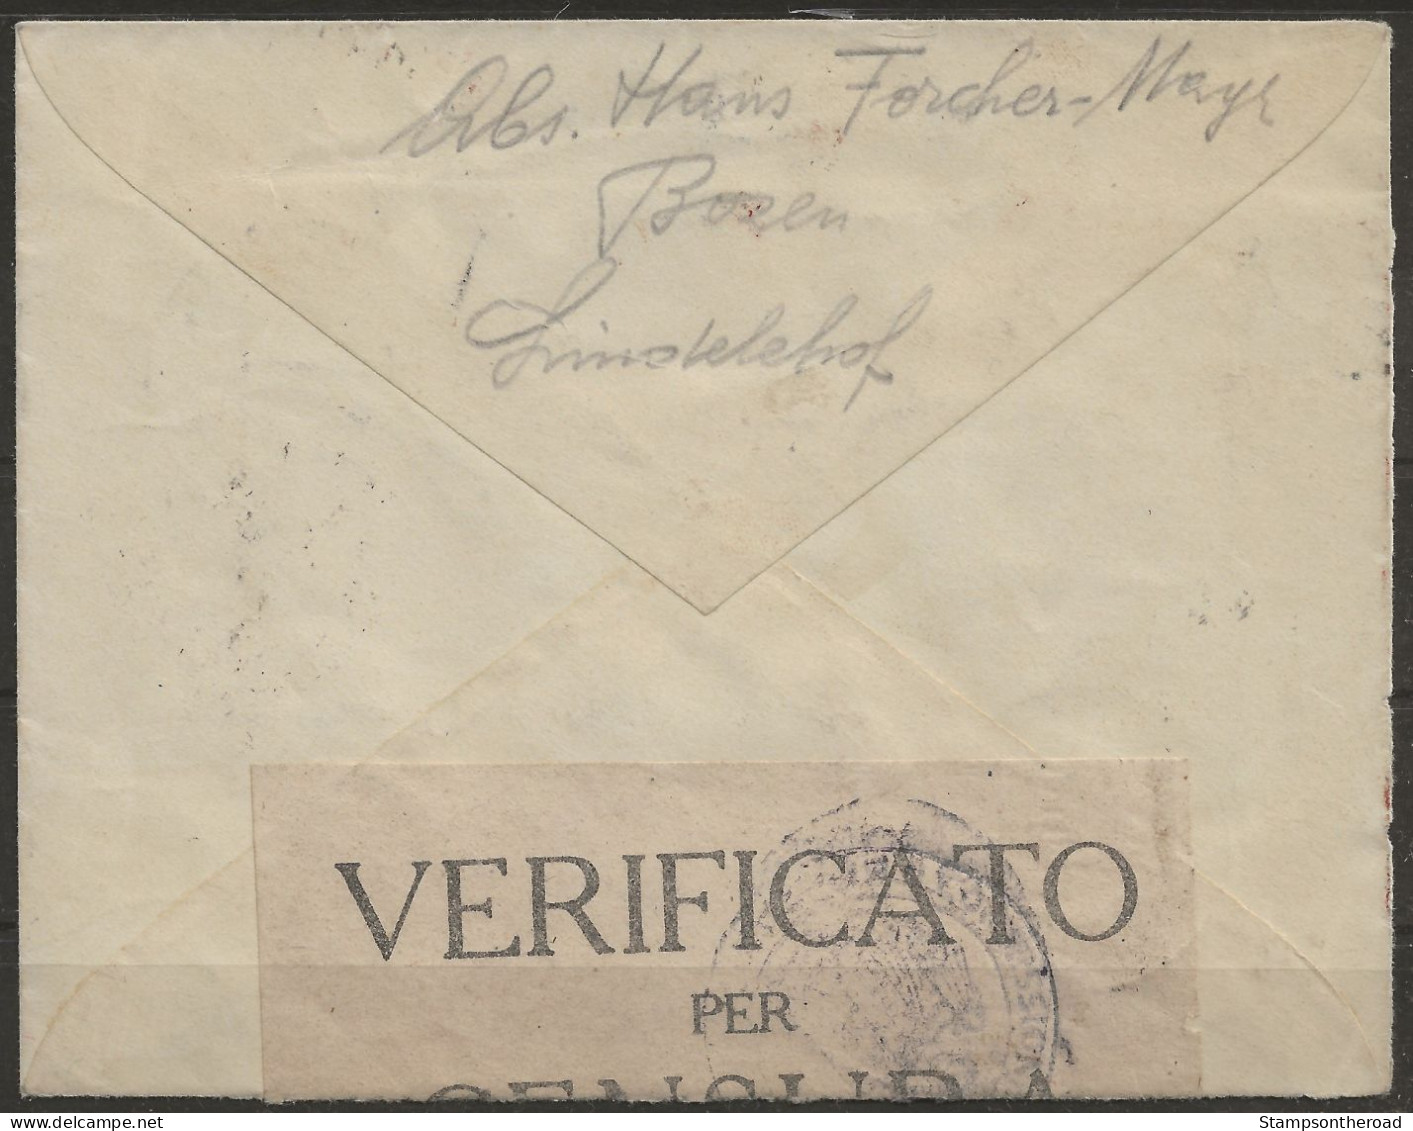 TRAA/SP01 Busta Inviata Da Bolzano L'8 Aprile 1919 Tassata Per 40 Heller, Verificata Per Censura.- - Trentino